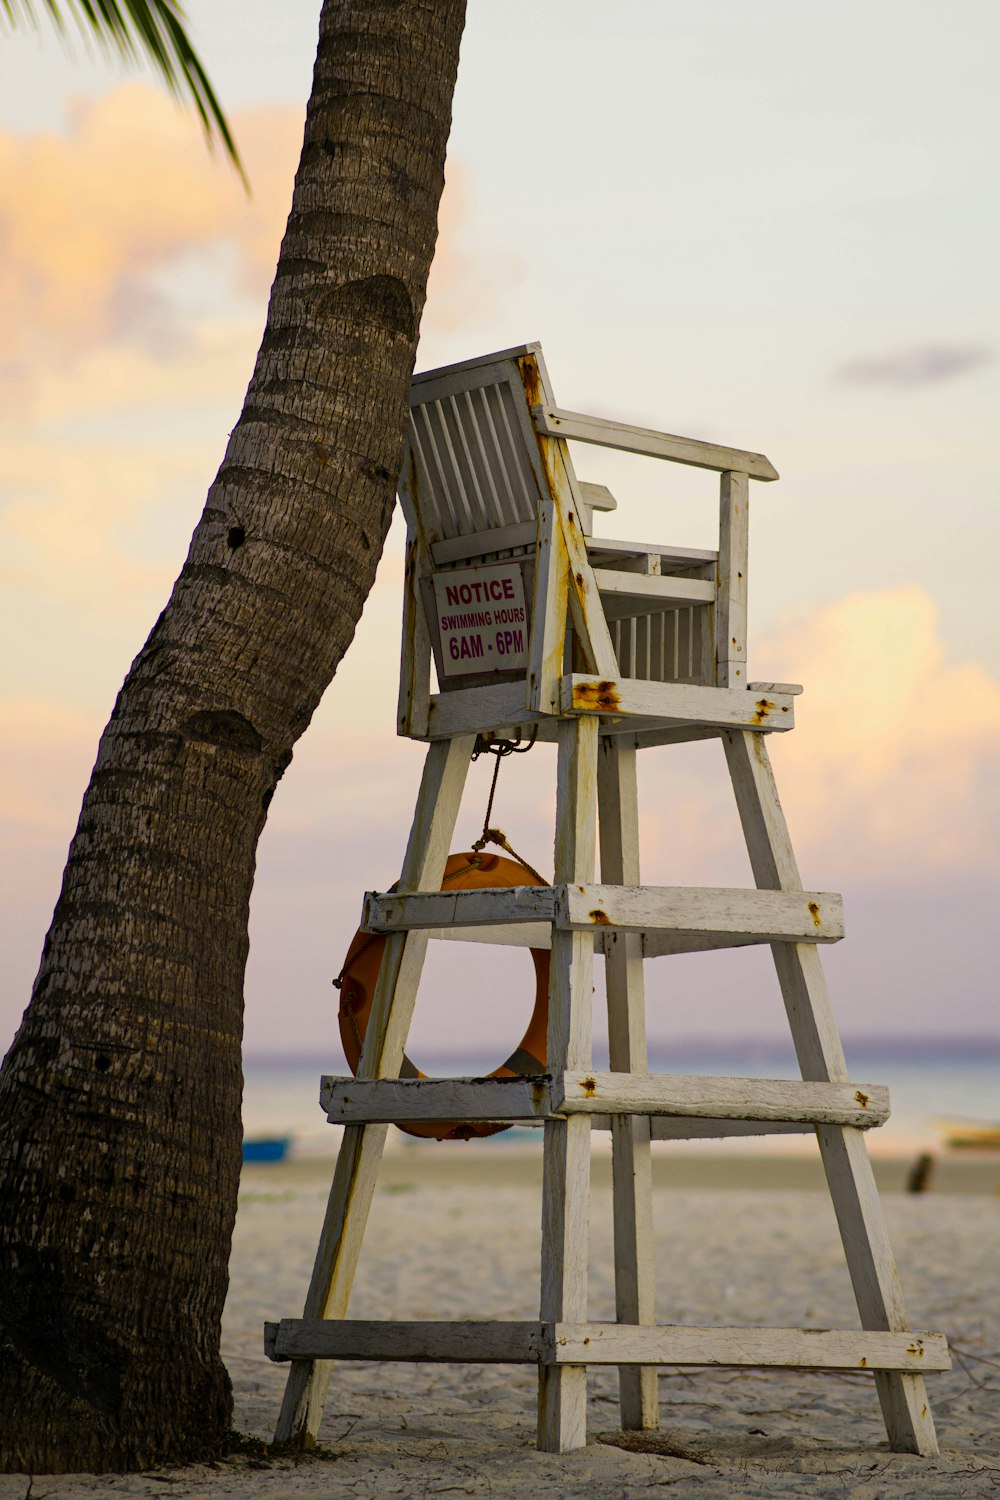 a lifeguard chair on a beach next to a palm tree